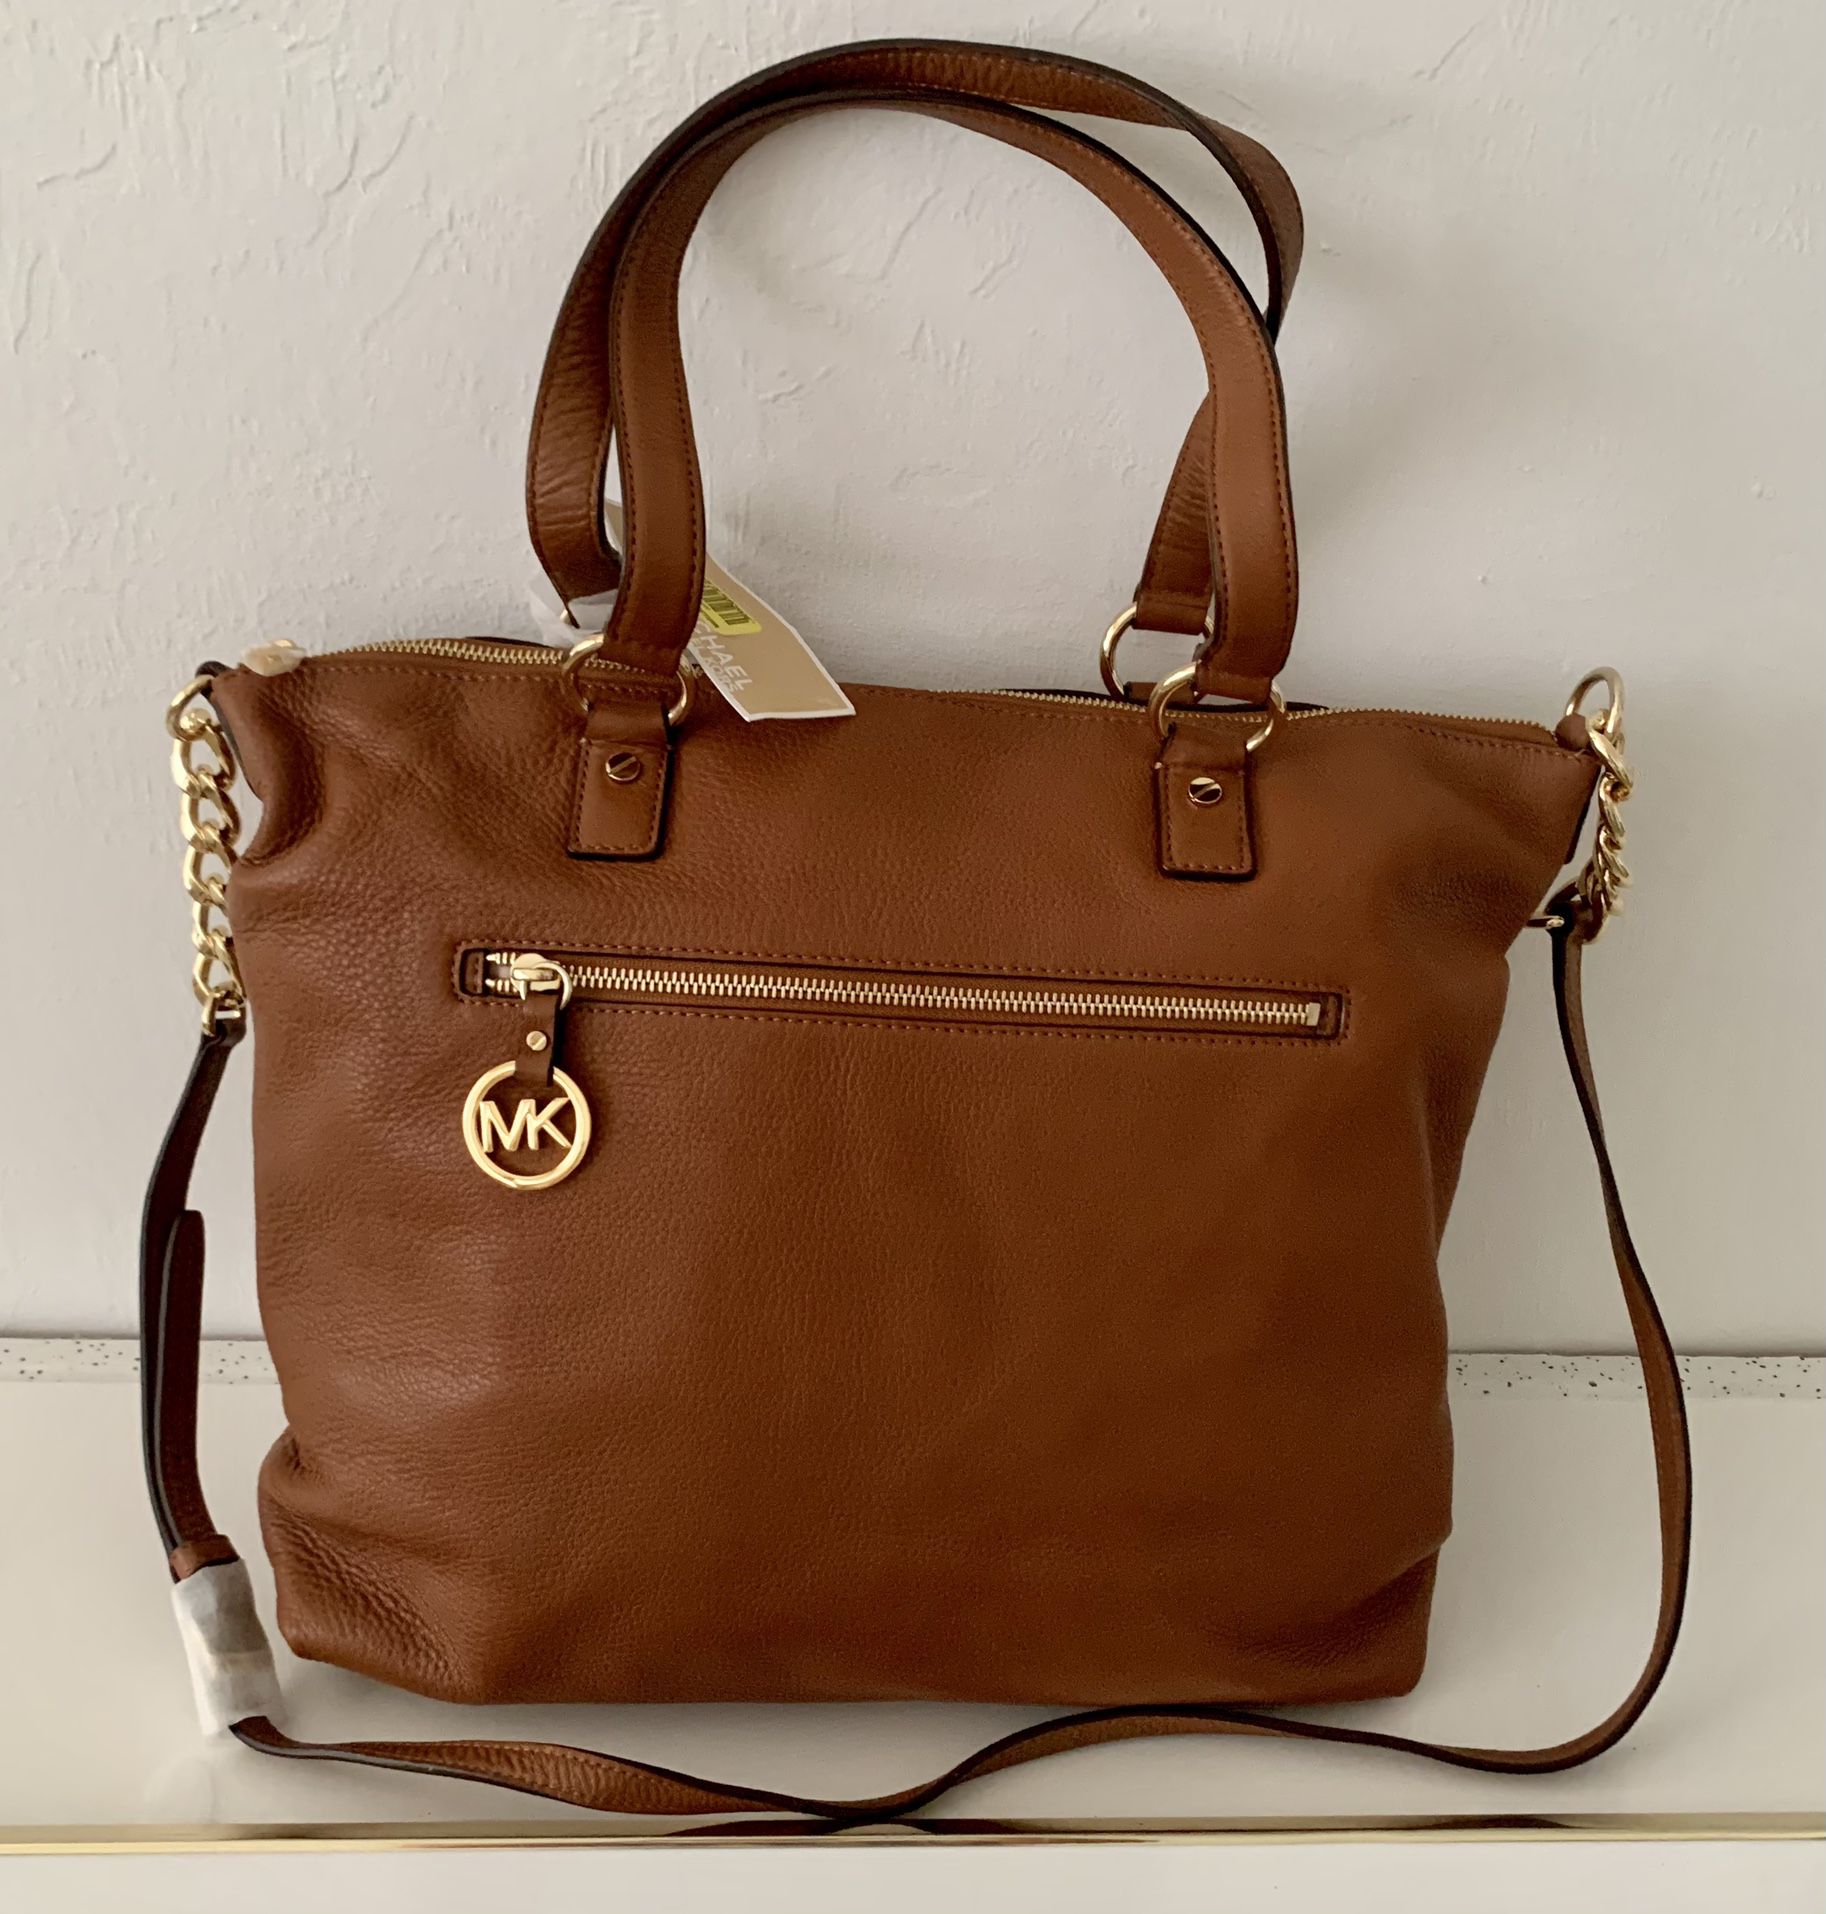 New Michael Kors Fulton genuine leather luggage brown beautiful large bag